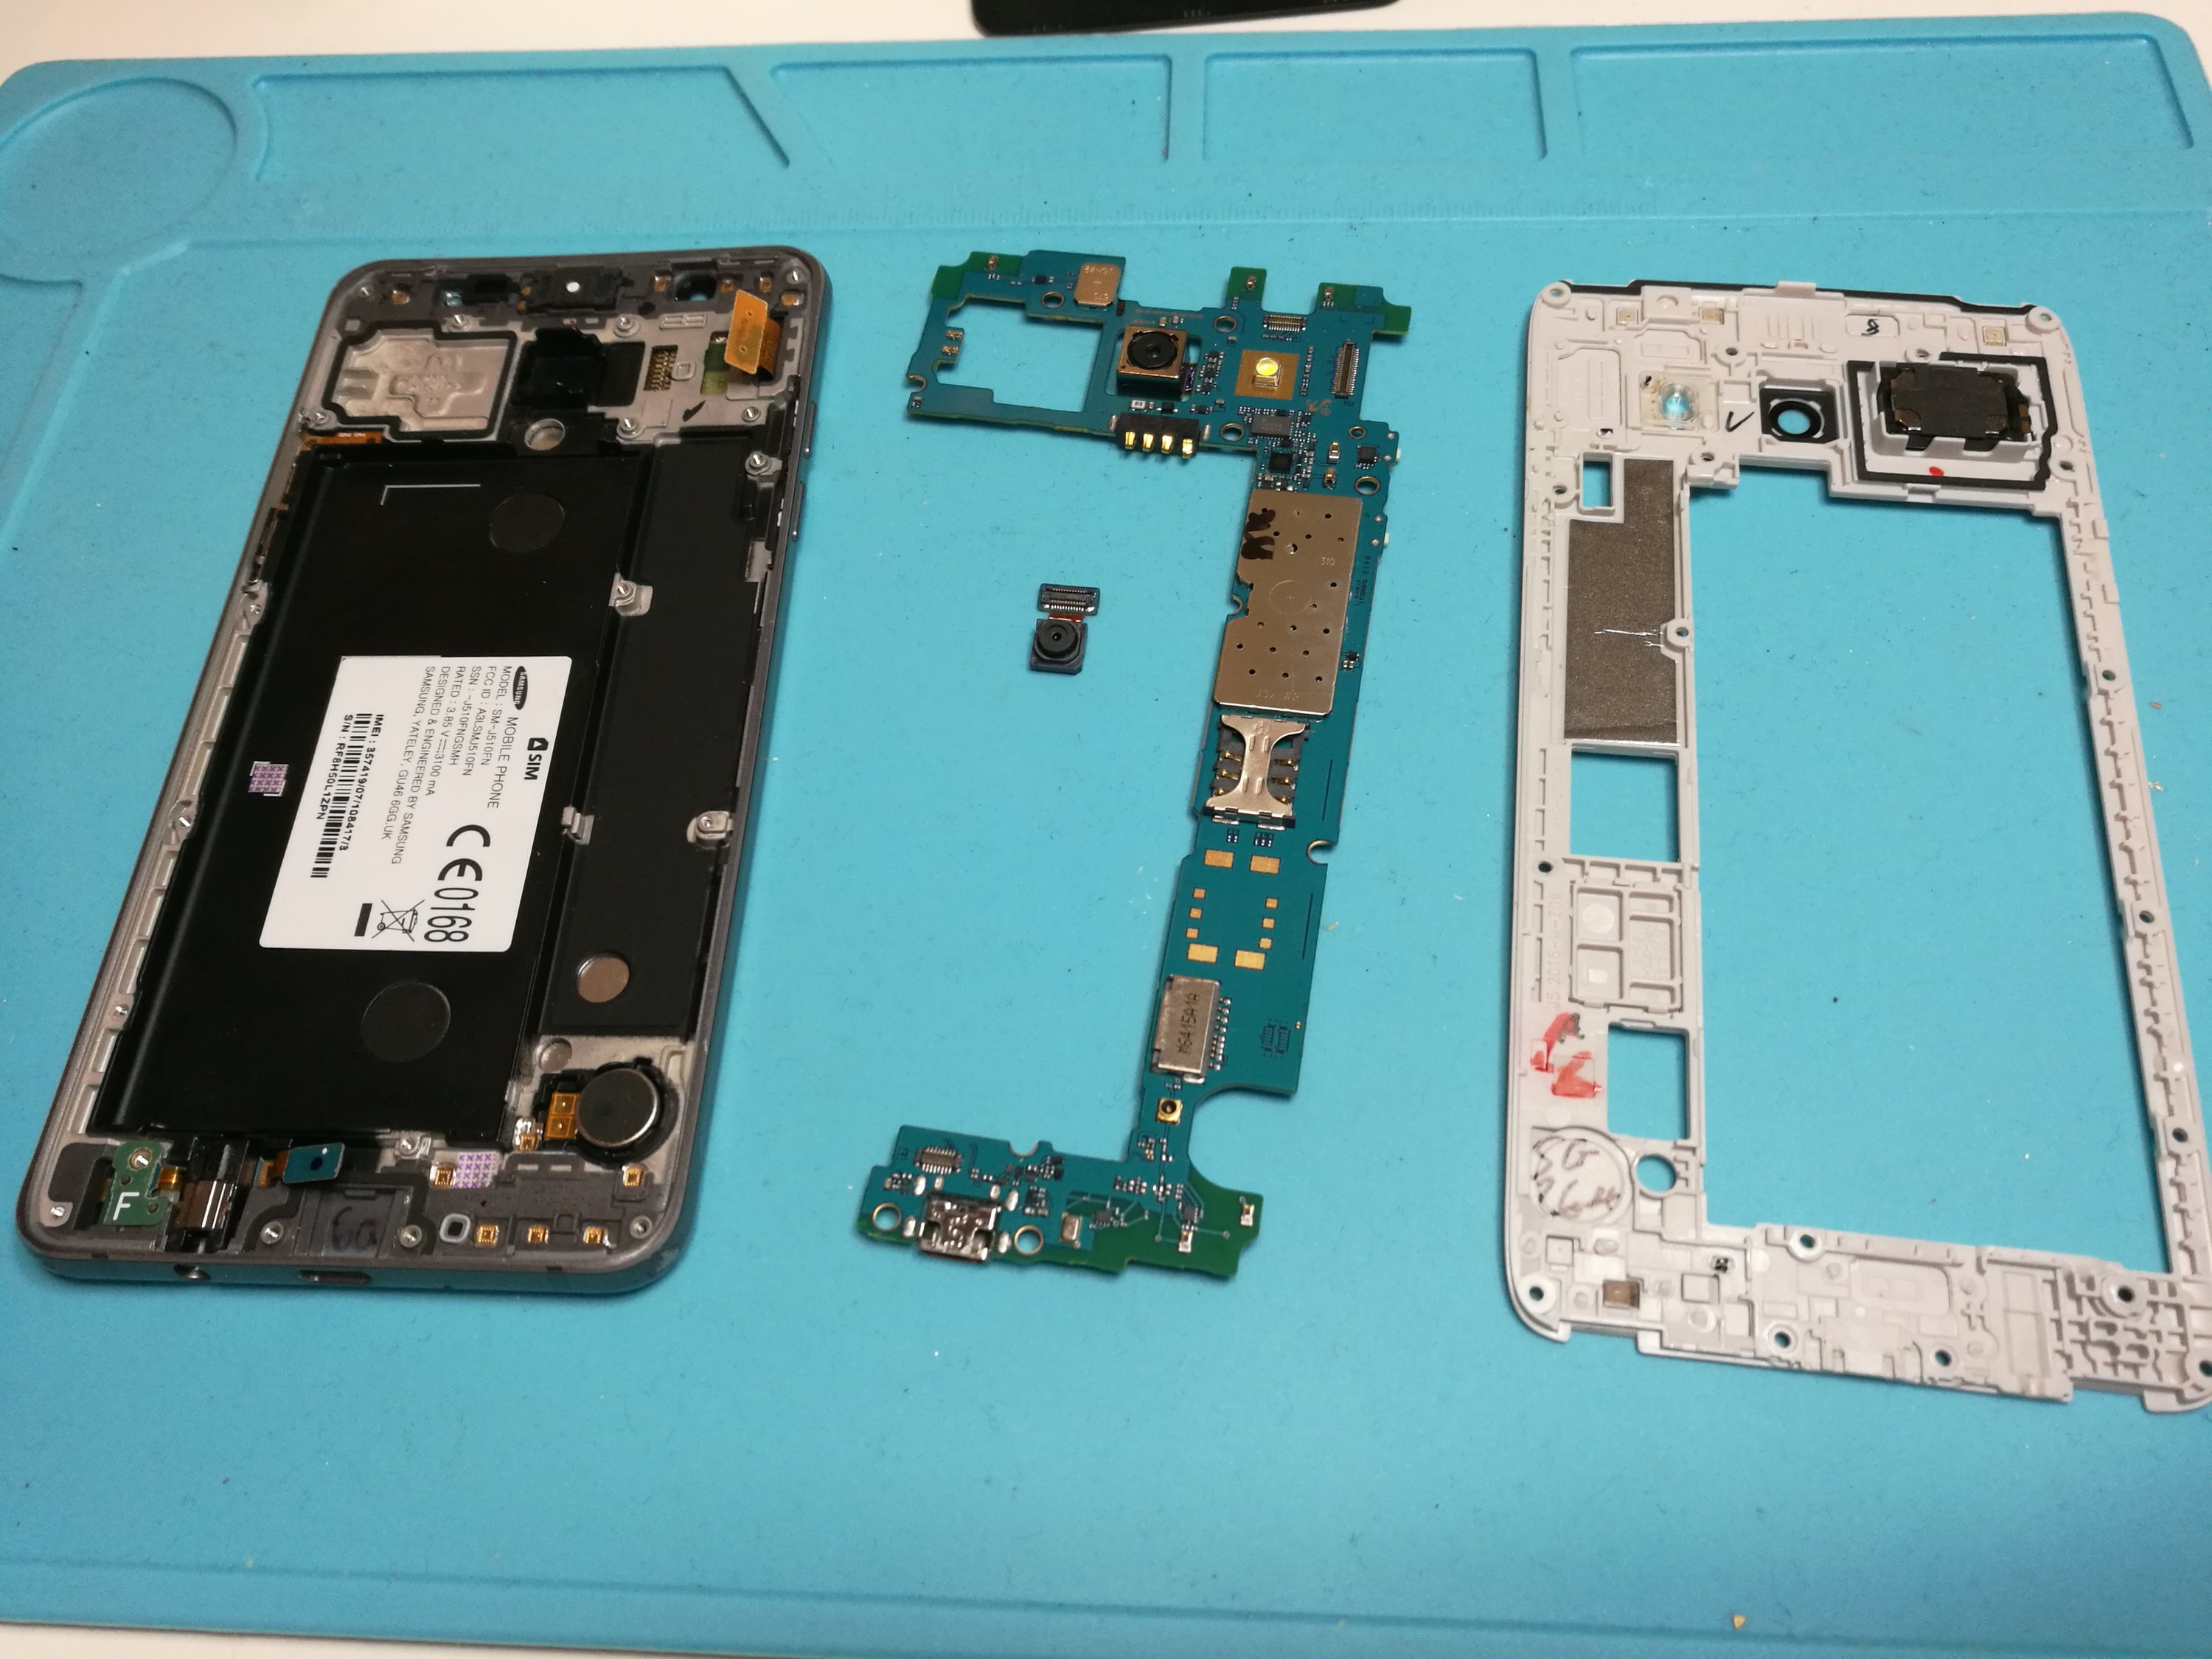 Samsung J5 Smart Phone Teardown